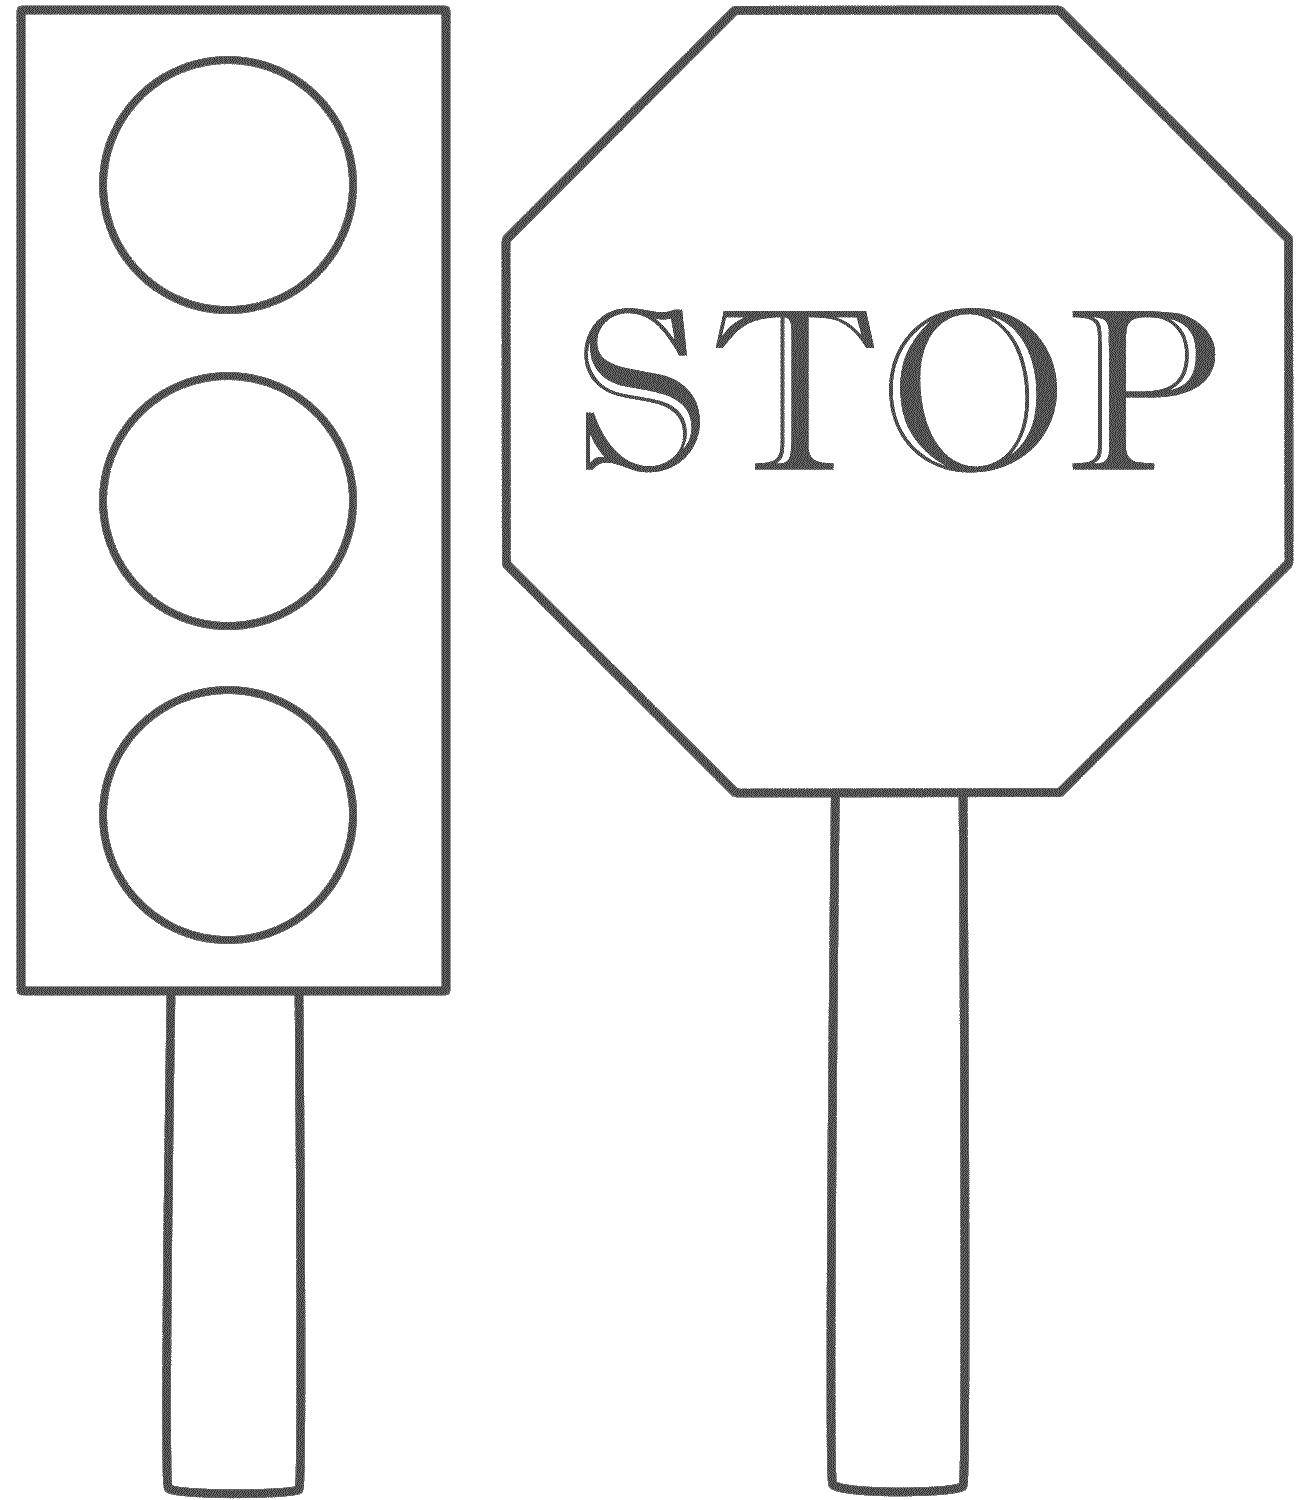 Coloring Traffic light. Category traffic light. Tags:  Traffic light.